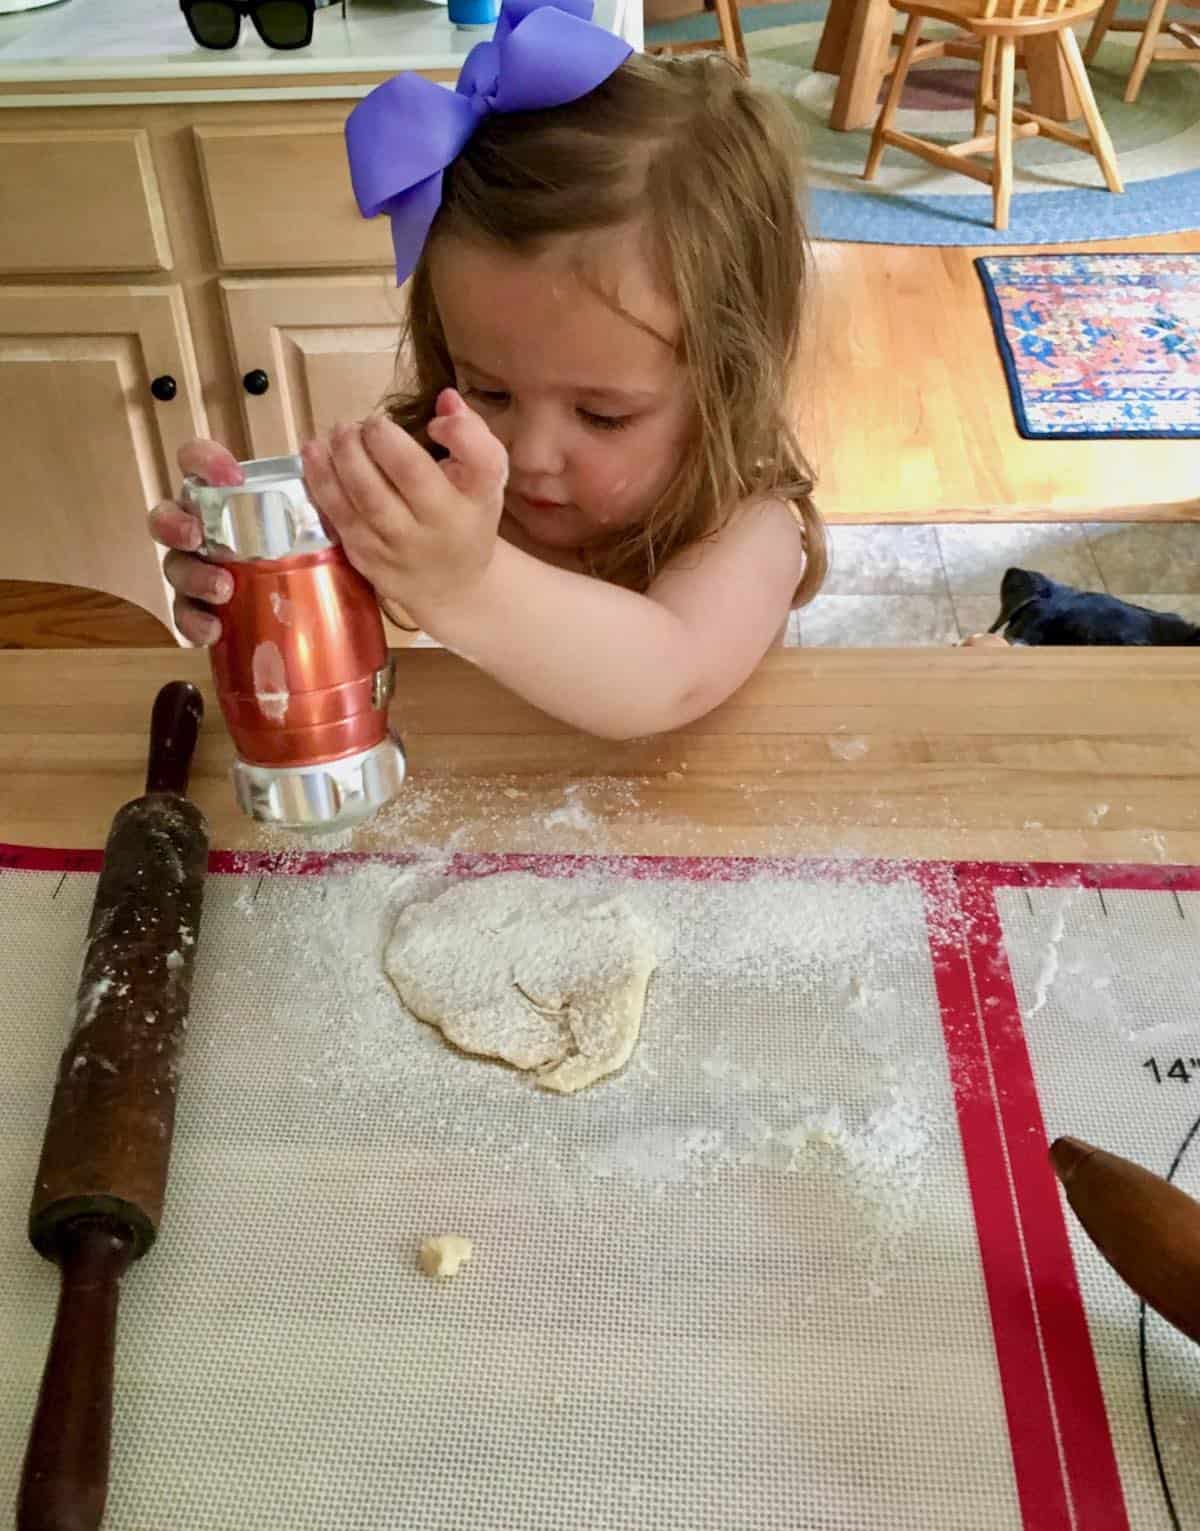 Grand daughter rolling pie dough.